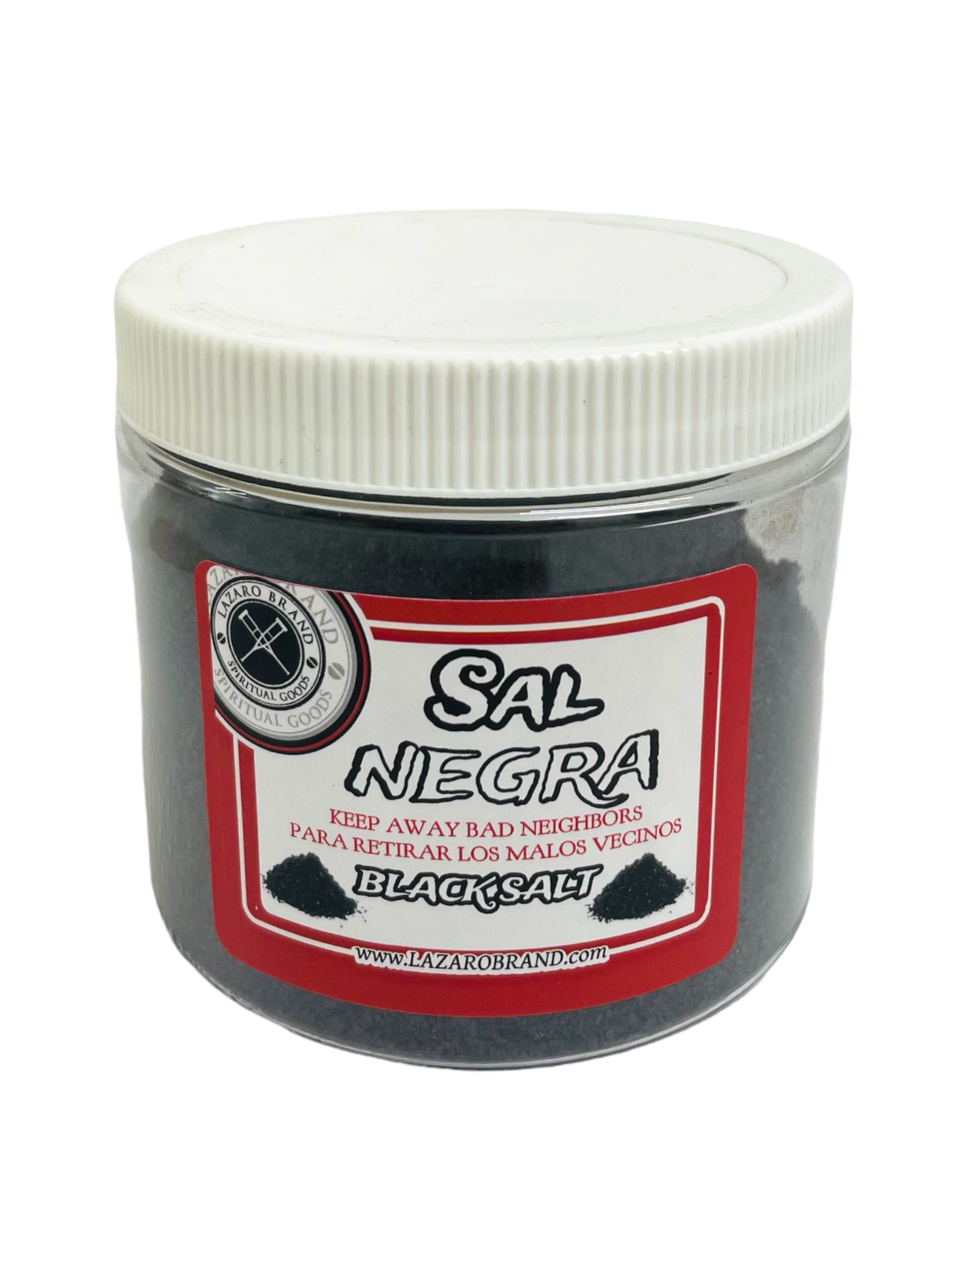 Black Salt Sal Negra 16oz For Protection, Run Devil Run, Go Away Enemies,  ETC. - Lazaro Brand Spiritual Store